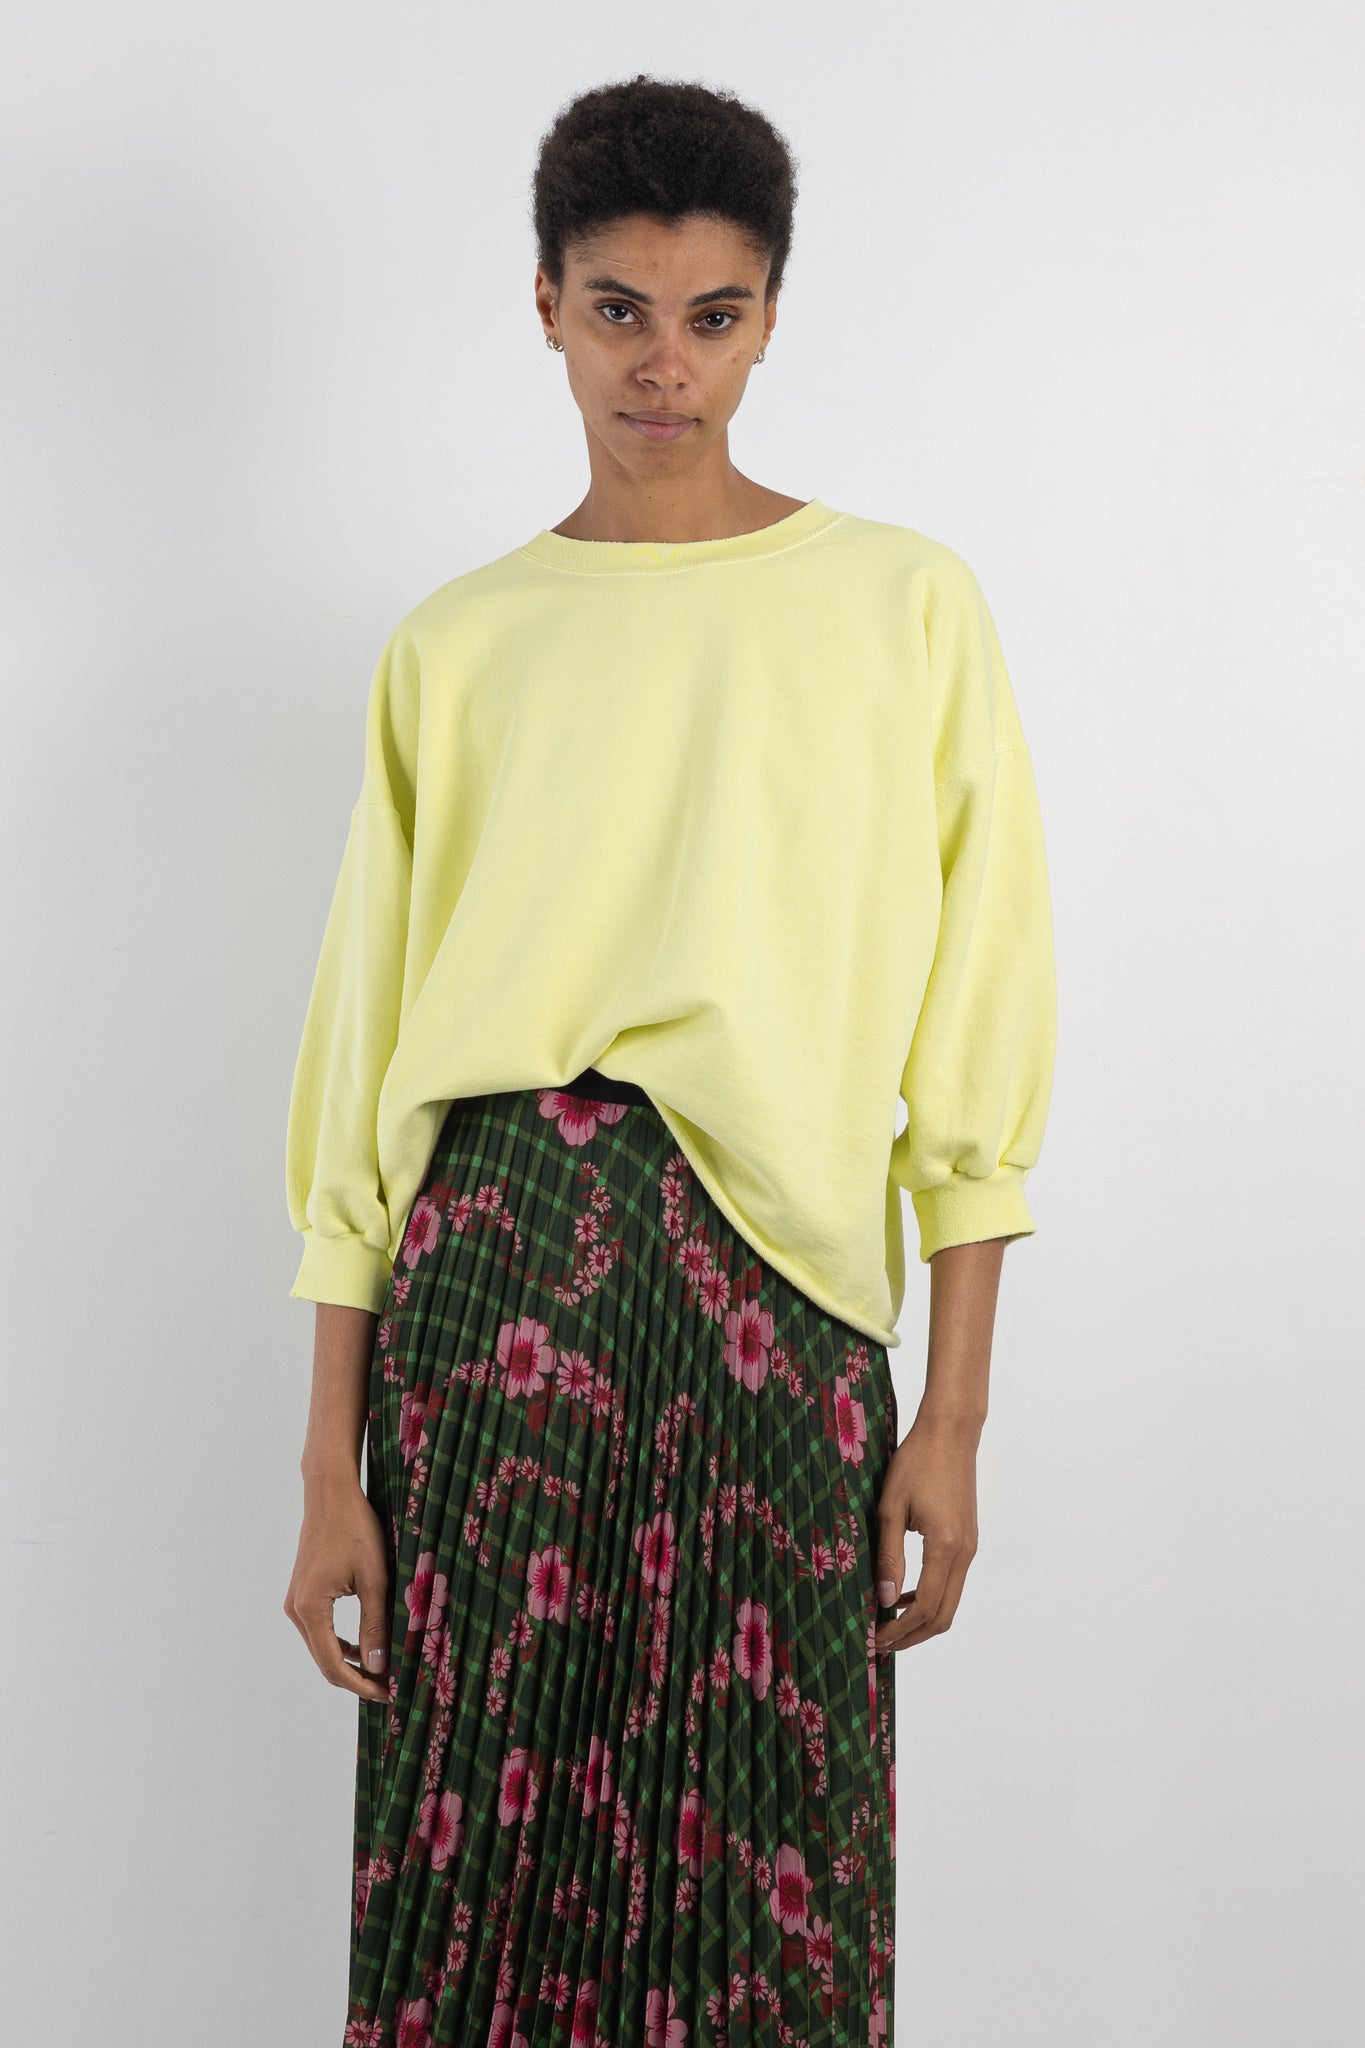 Womens sweatshirt | Rachel COmey Fond sweatshirt | The Standard Store